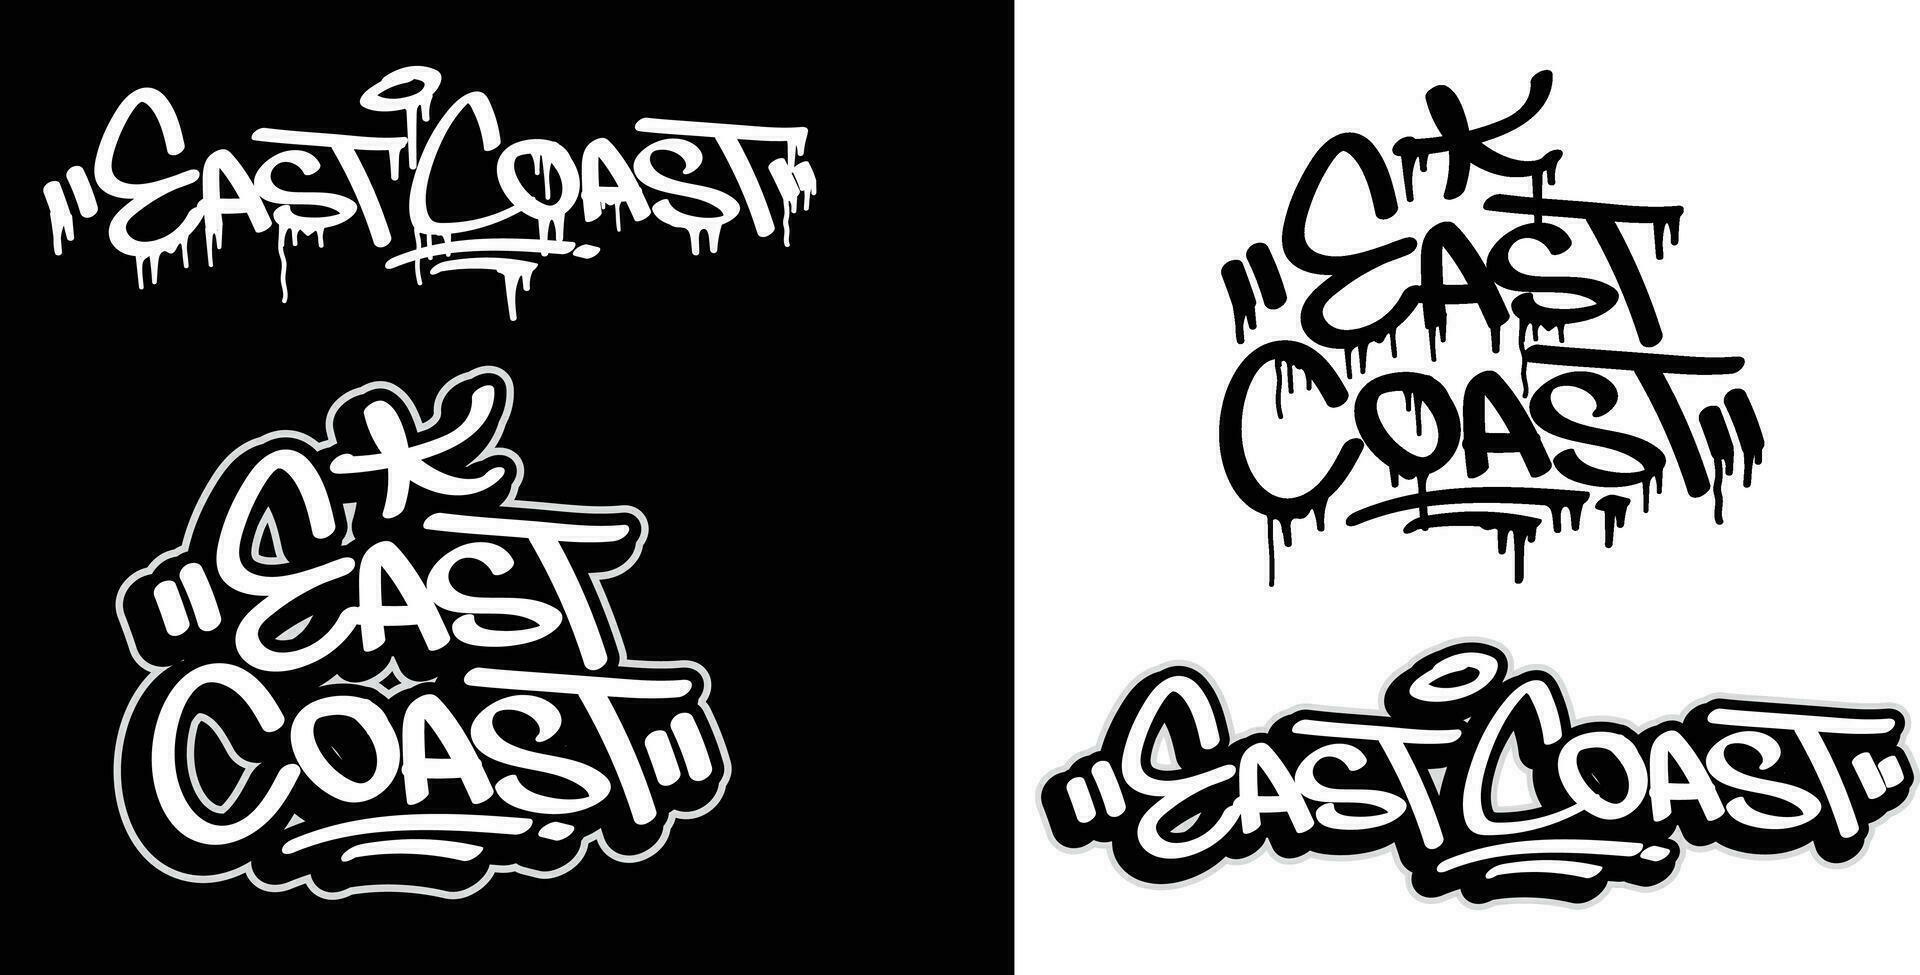 Osten Küste Text im Graffiti Etikett Schriftart Stil. Graffiti Text Vektor Illustrationen.